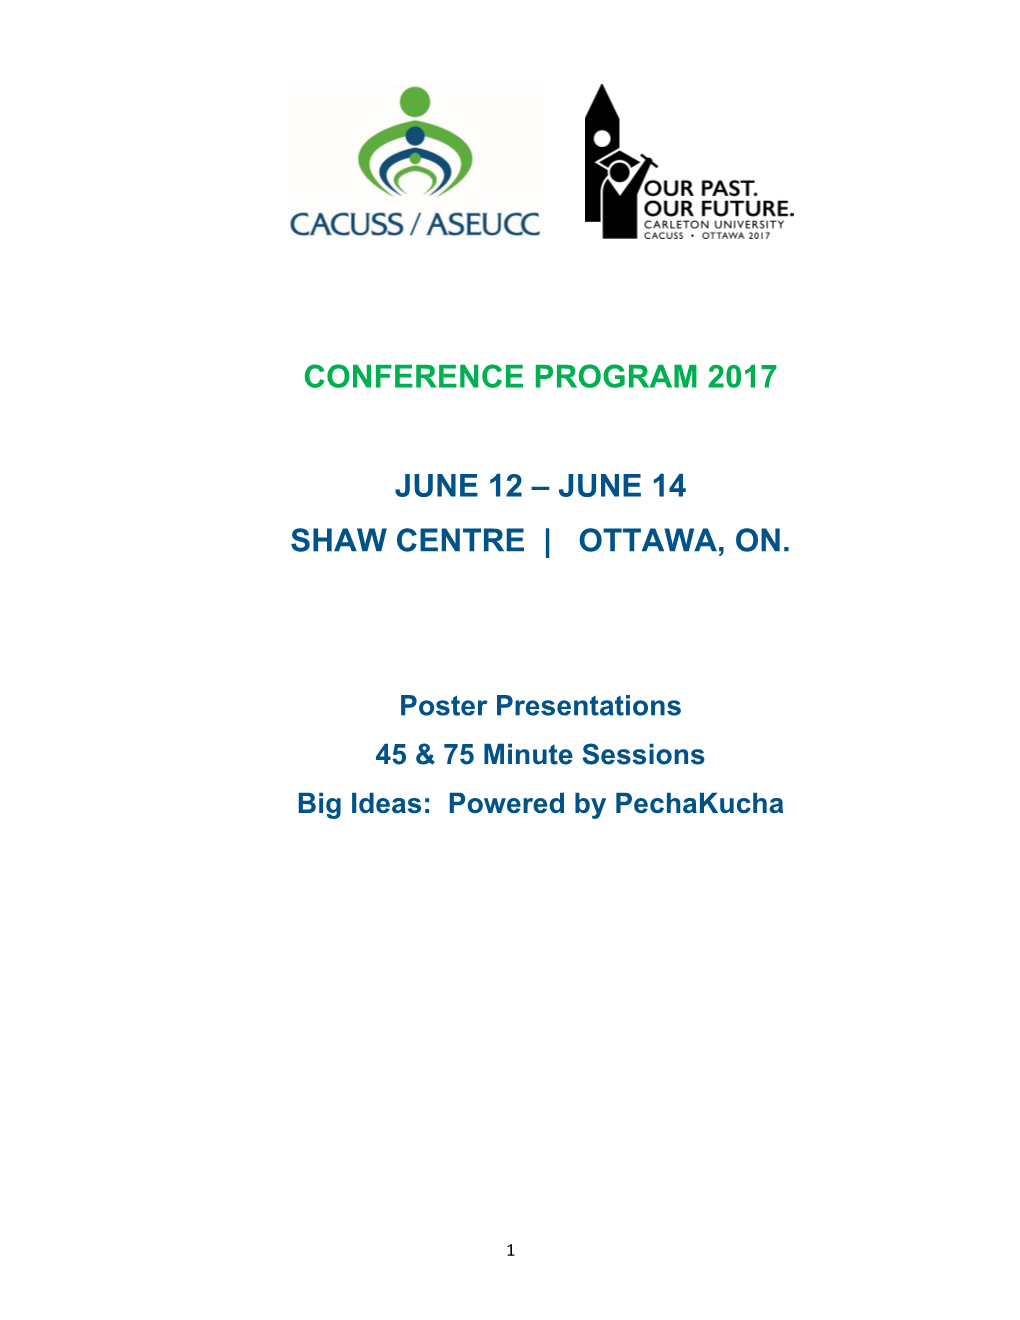 Conference Program 2017